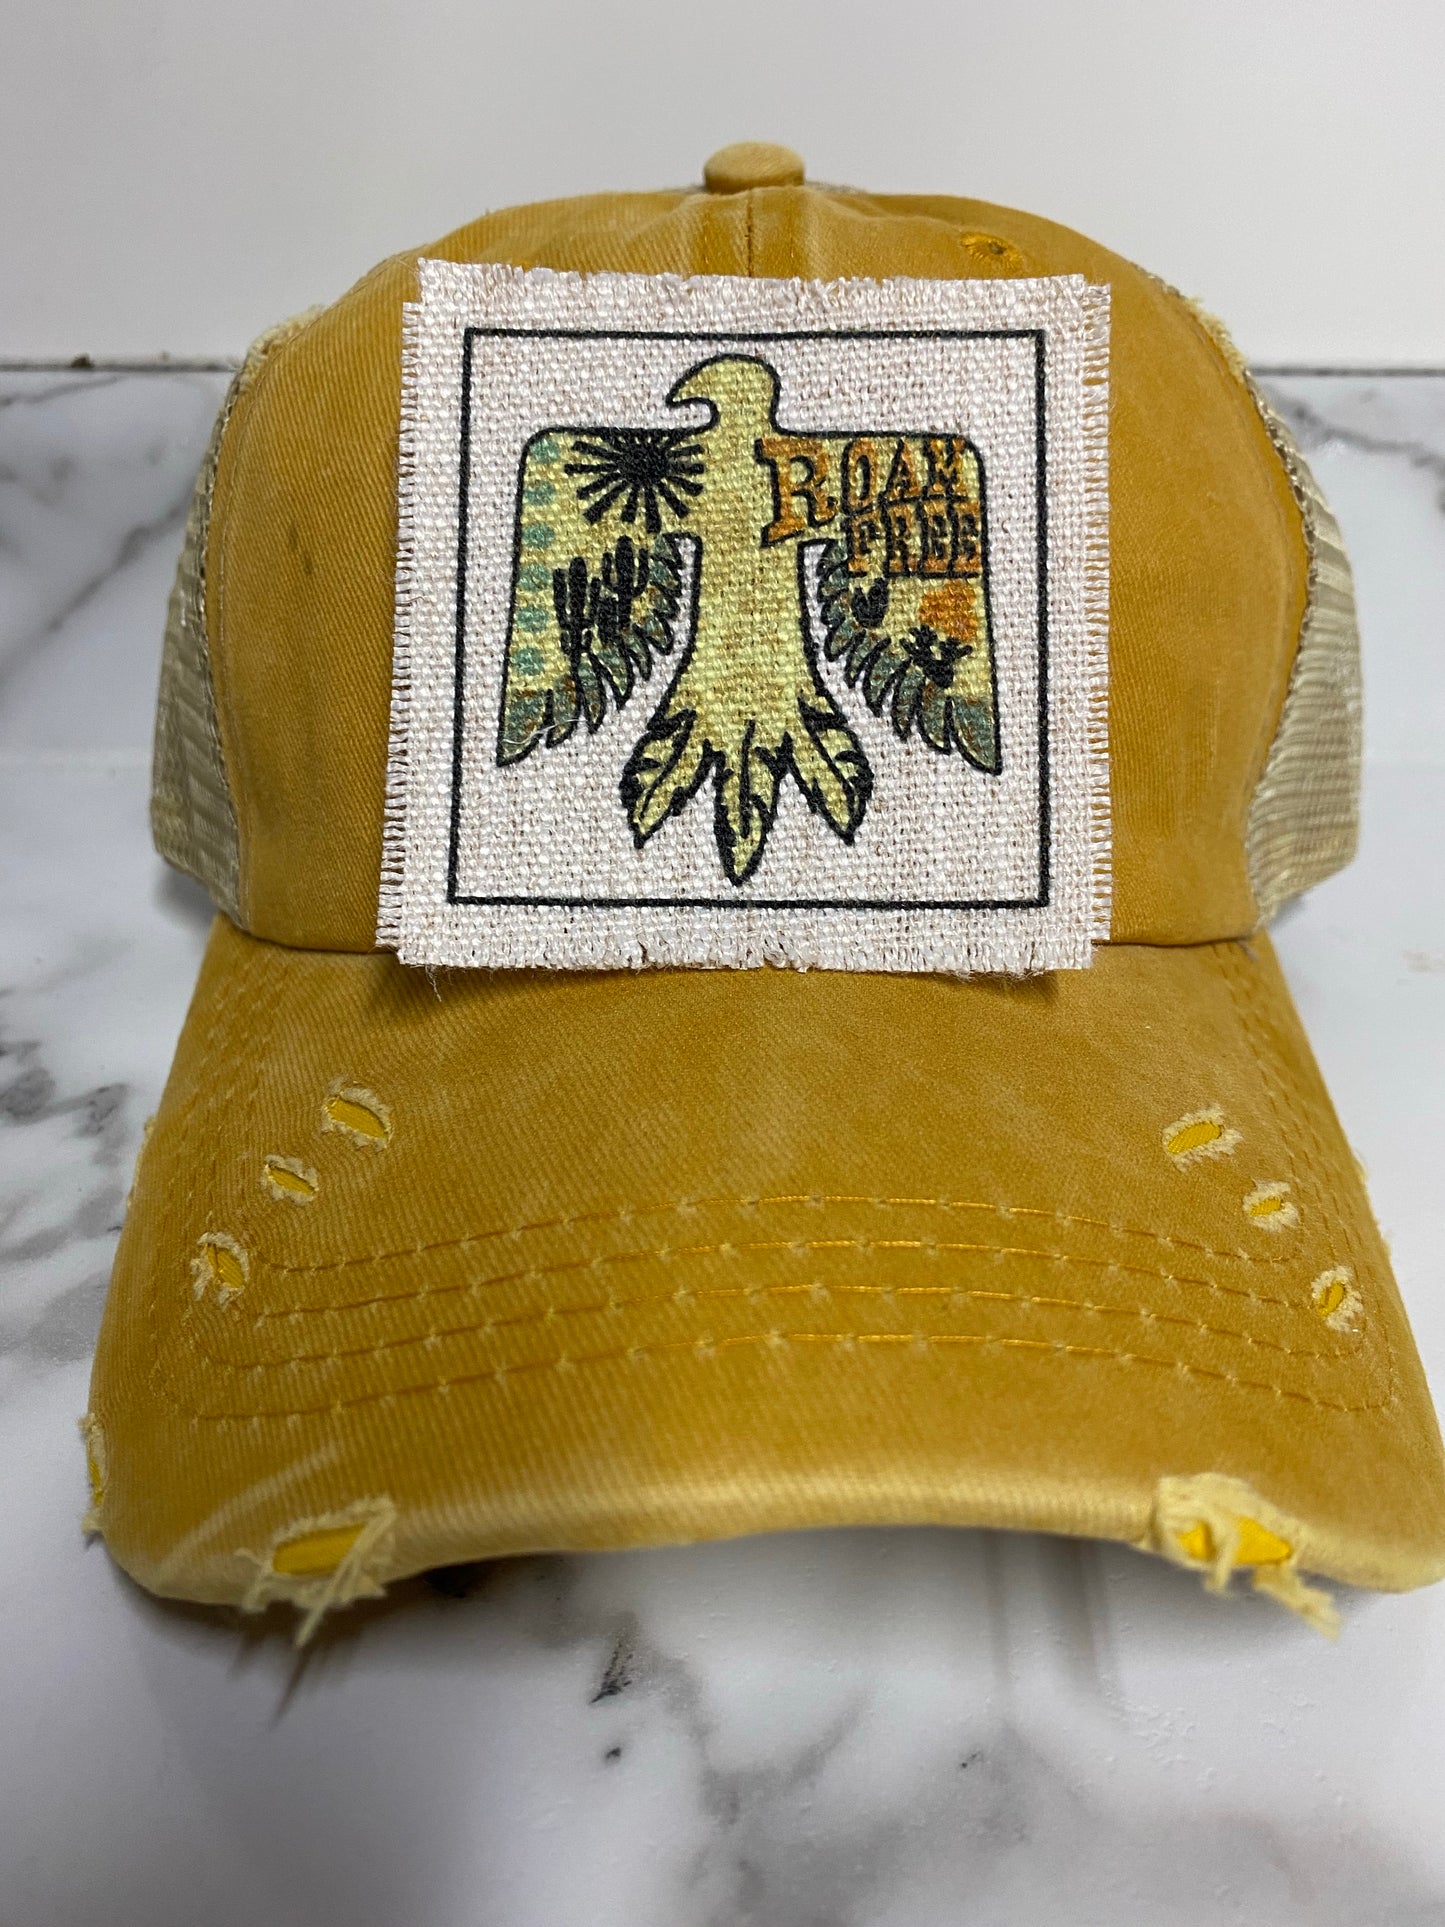 Roam Free Bird Hat Patch